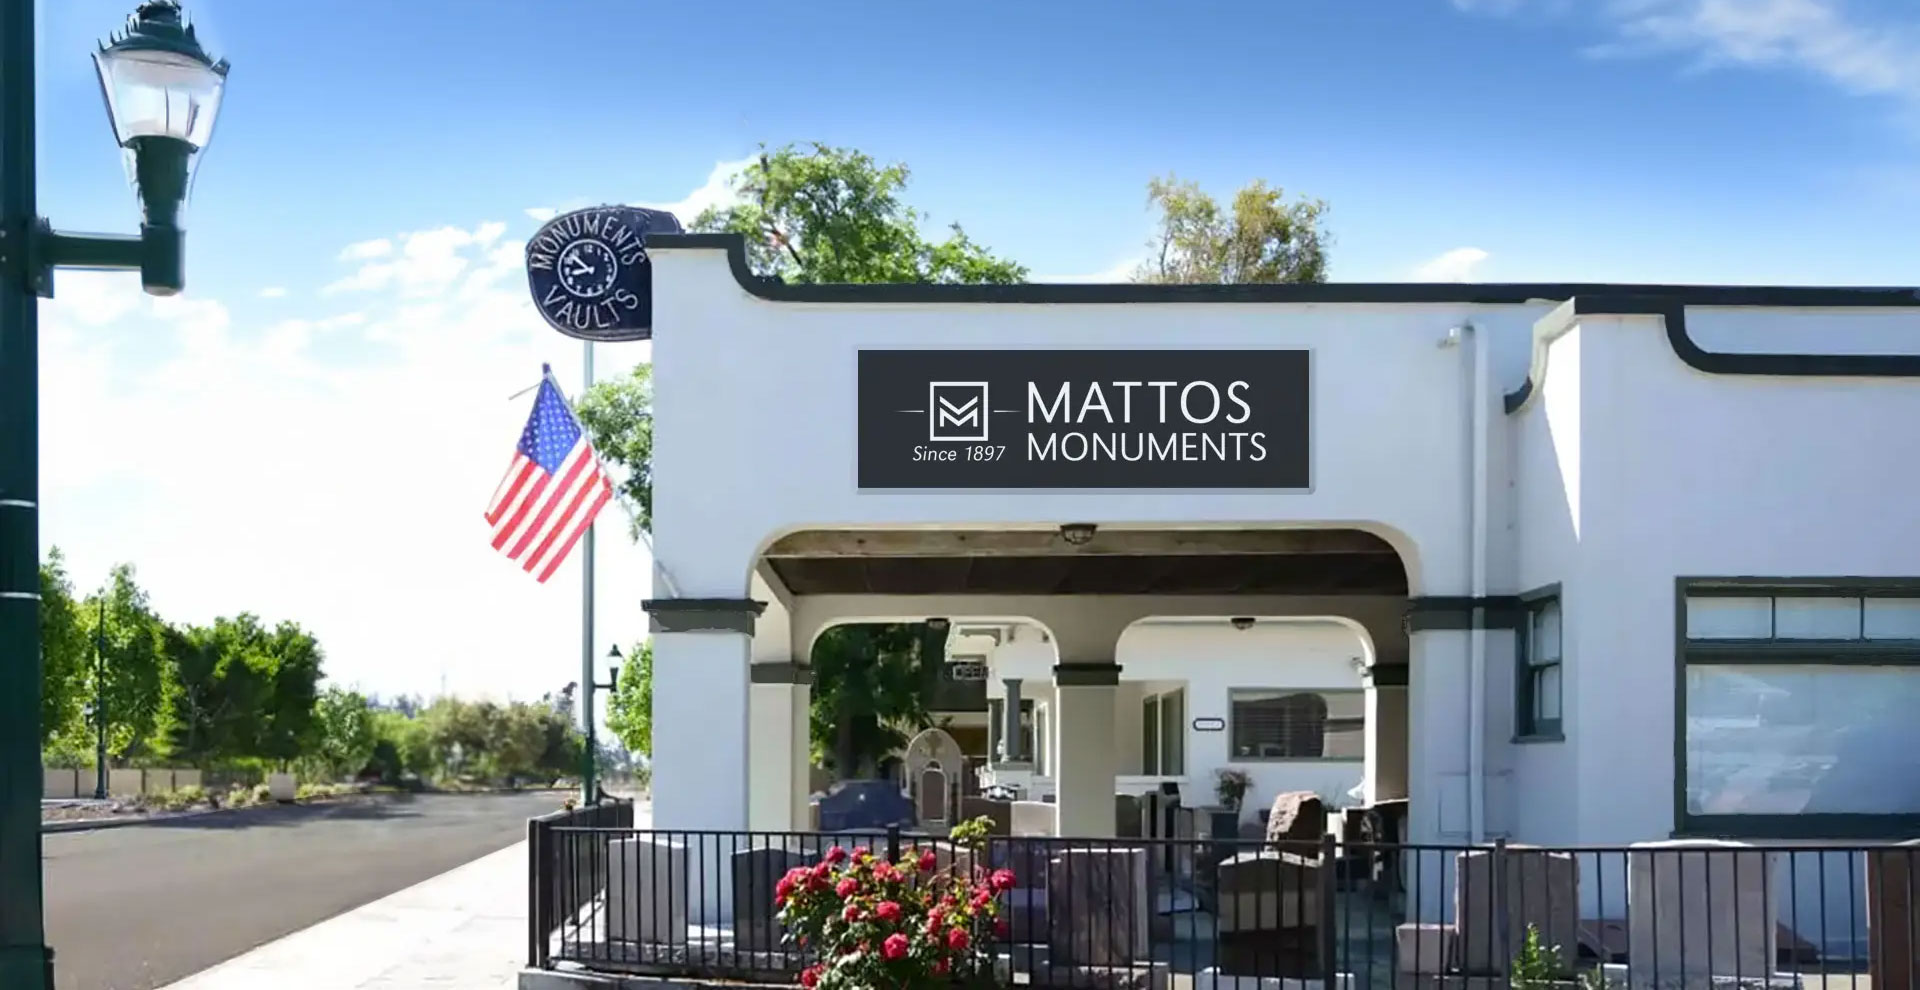 Read testimonials & reviews. Photo of exterior Mattos Monument building in Hayward, California